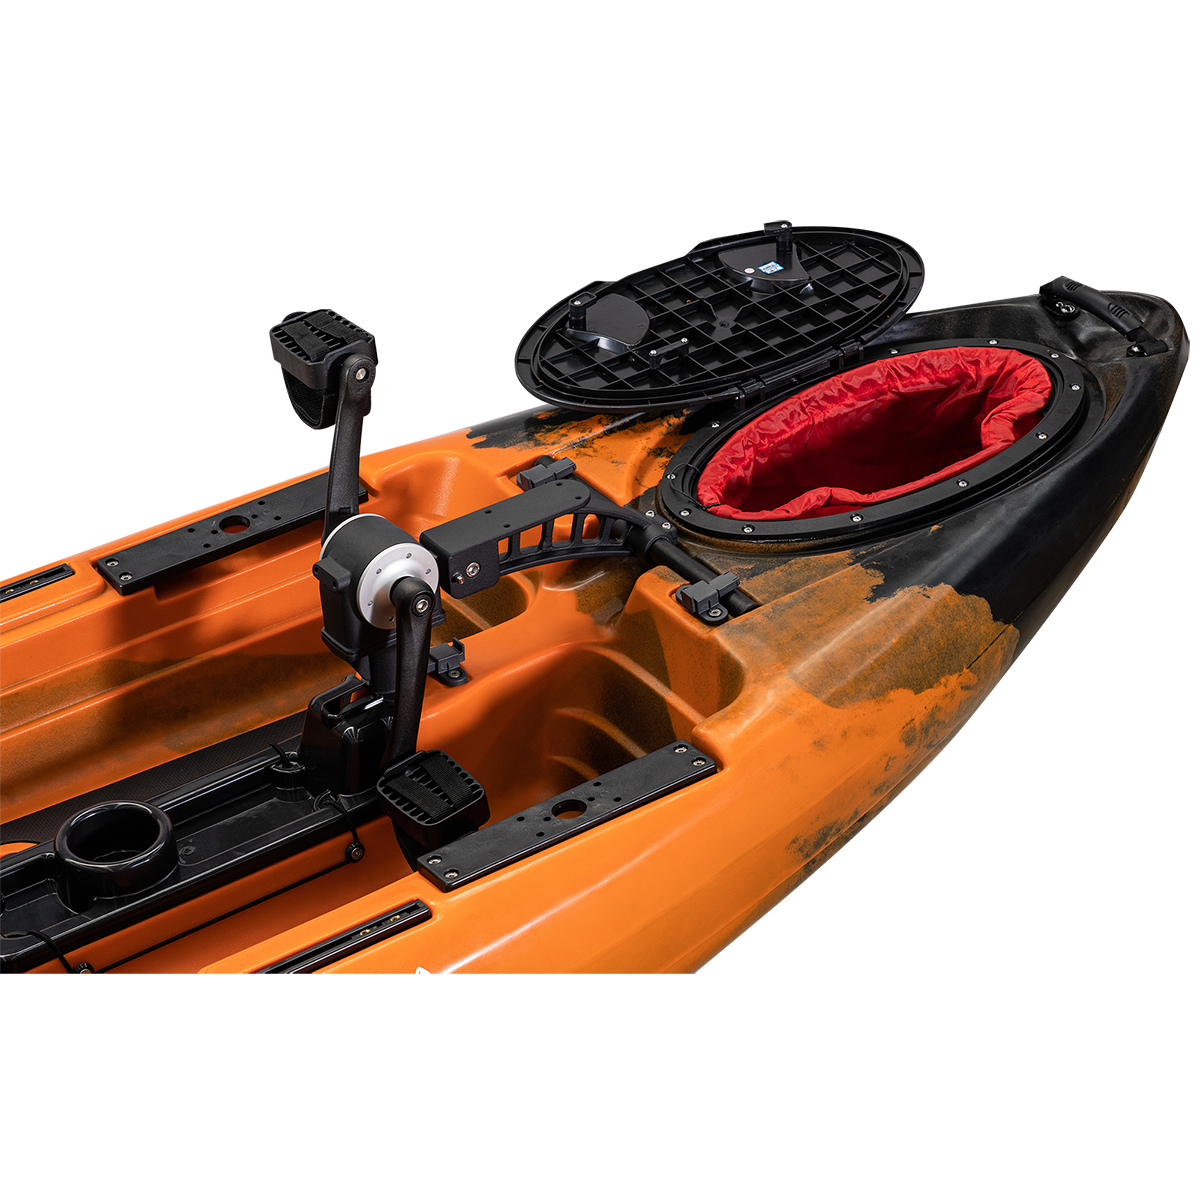 Accent Master Angler Fishing Kayak Paddle for Sale - Ski Shack